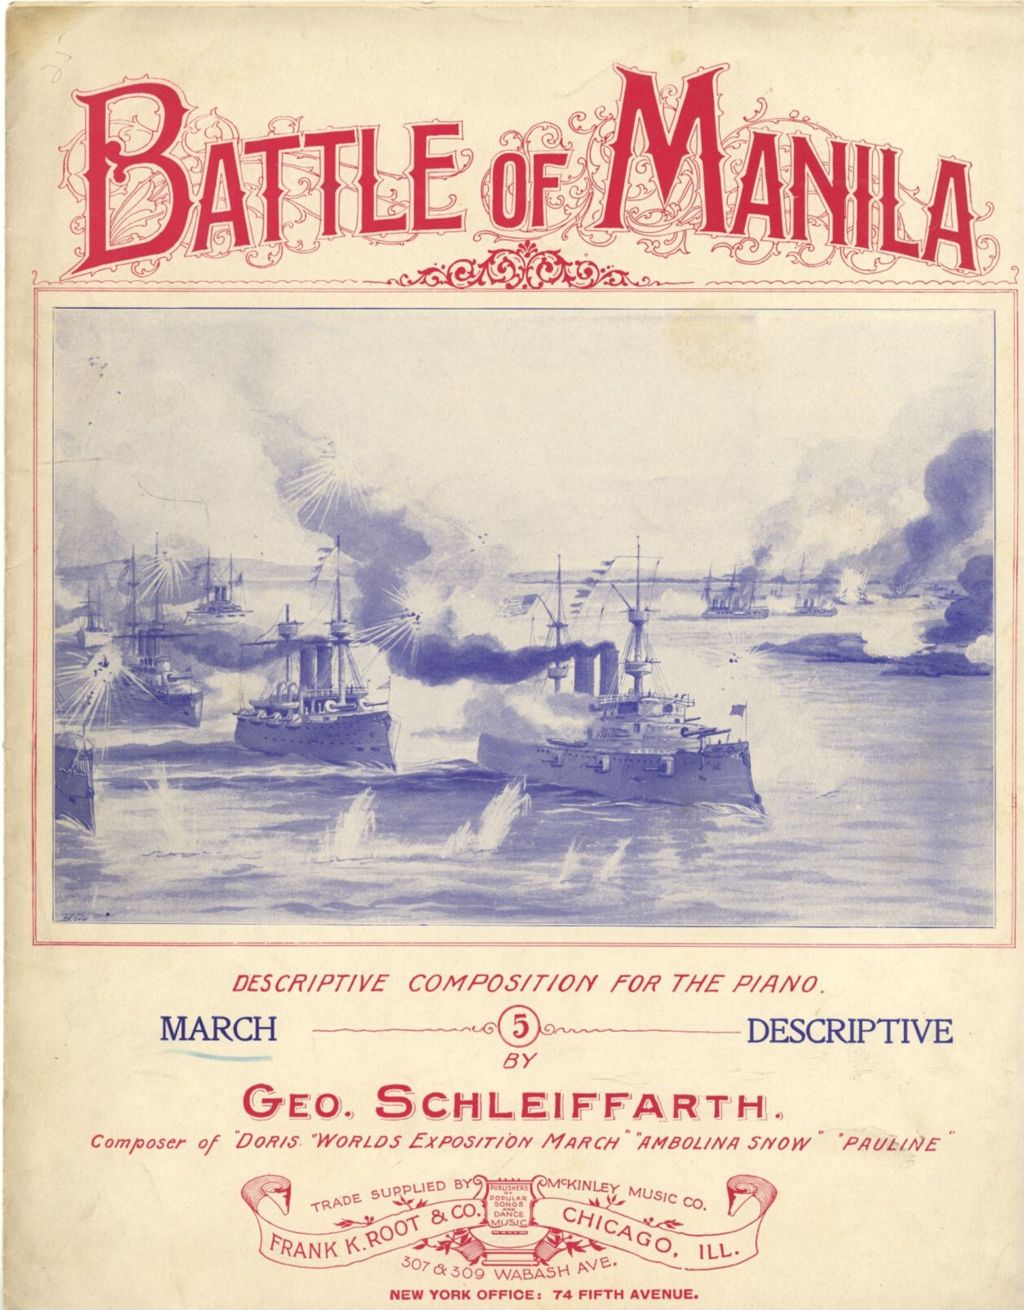 Manila Grand March (Battle of Manila)